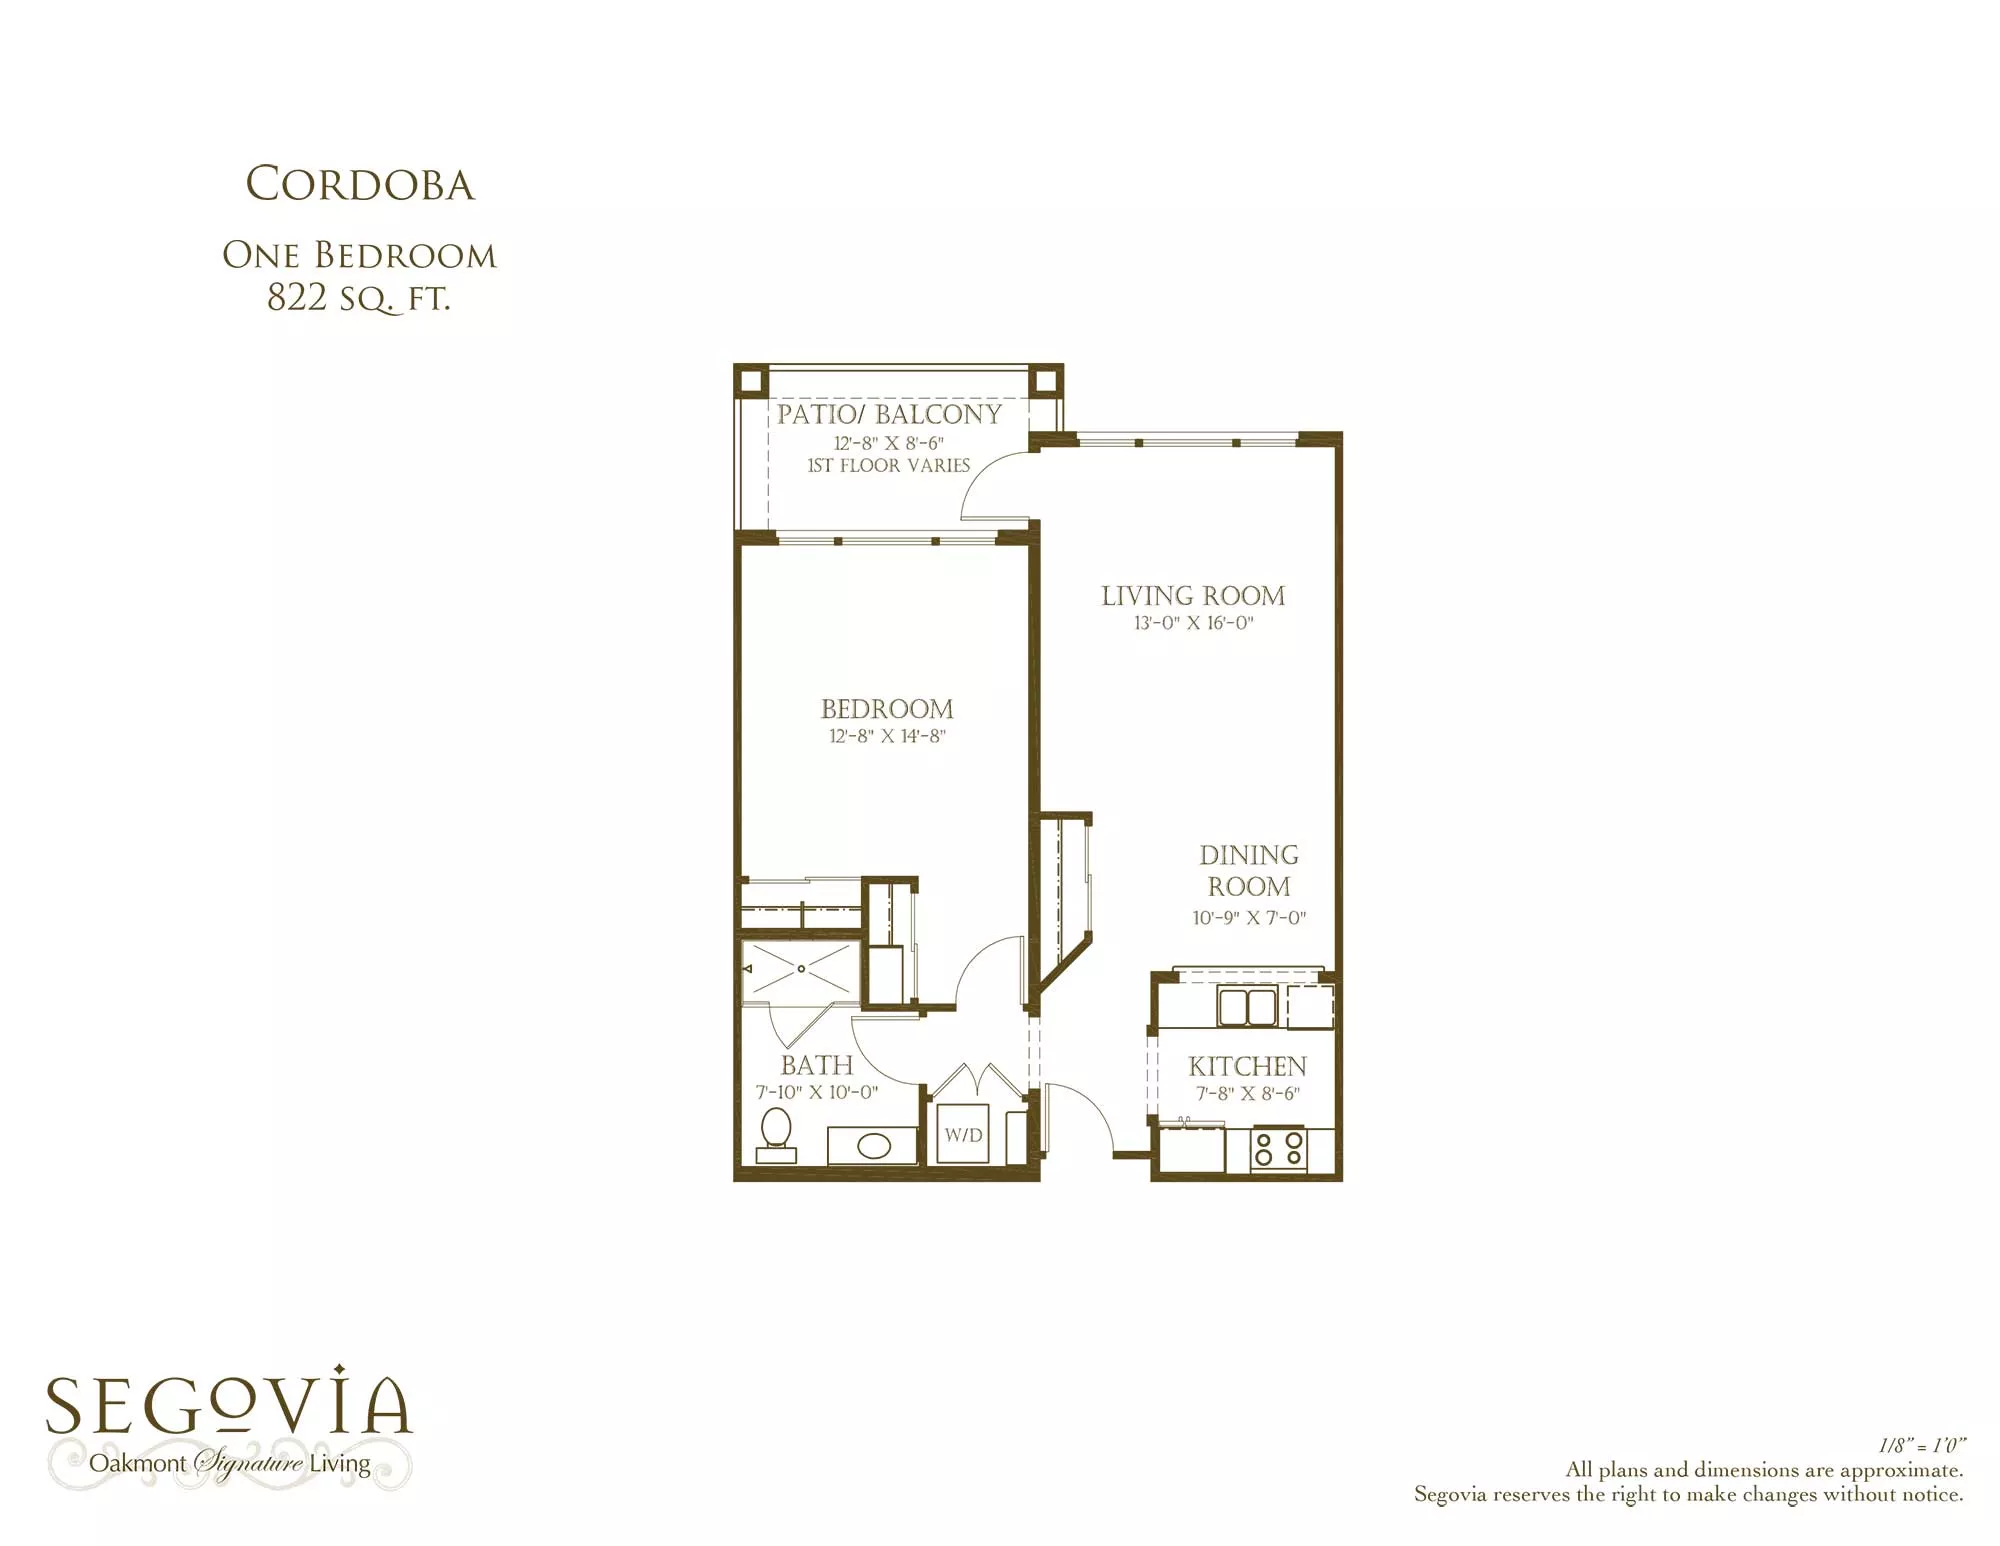 Cordoba one bedroom floor plan